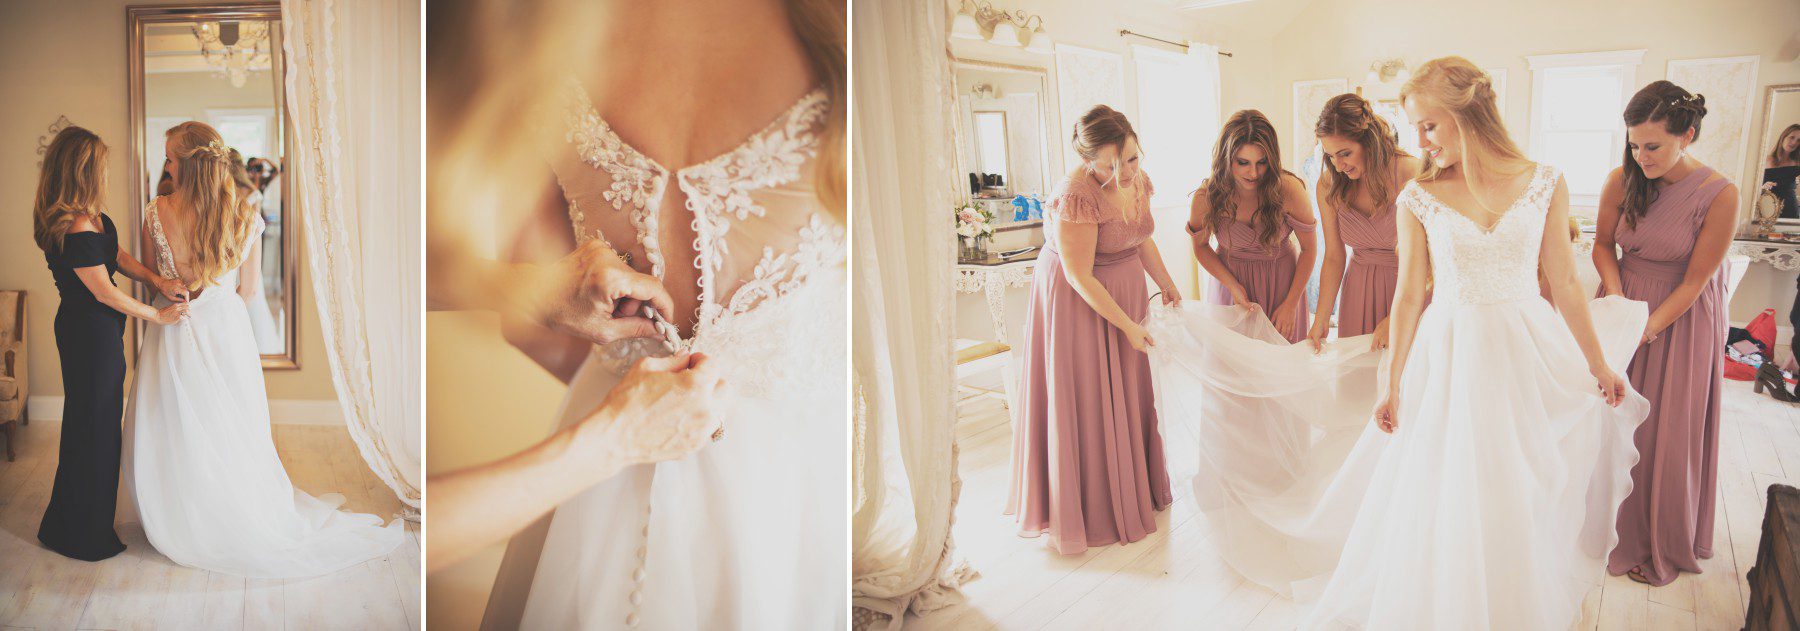 Mom helps bride get into dress before wedding ceremony